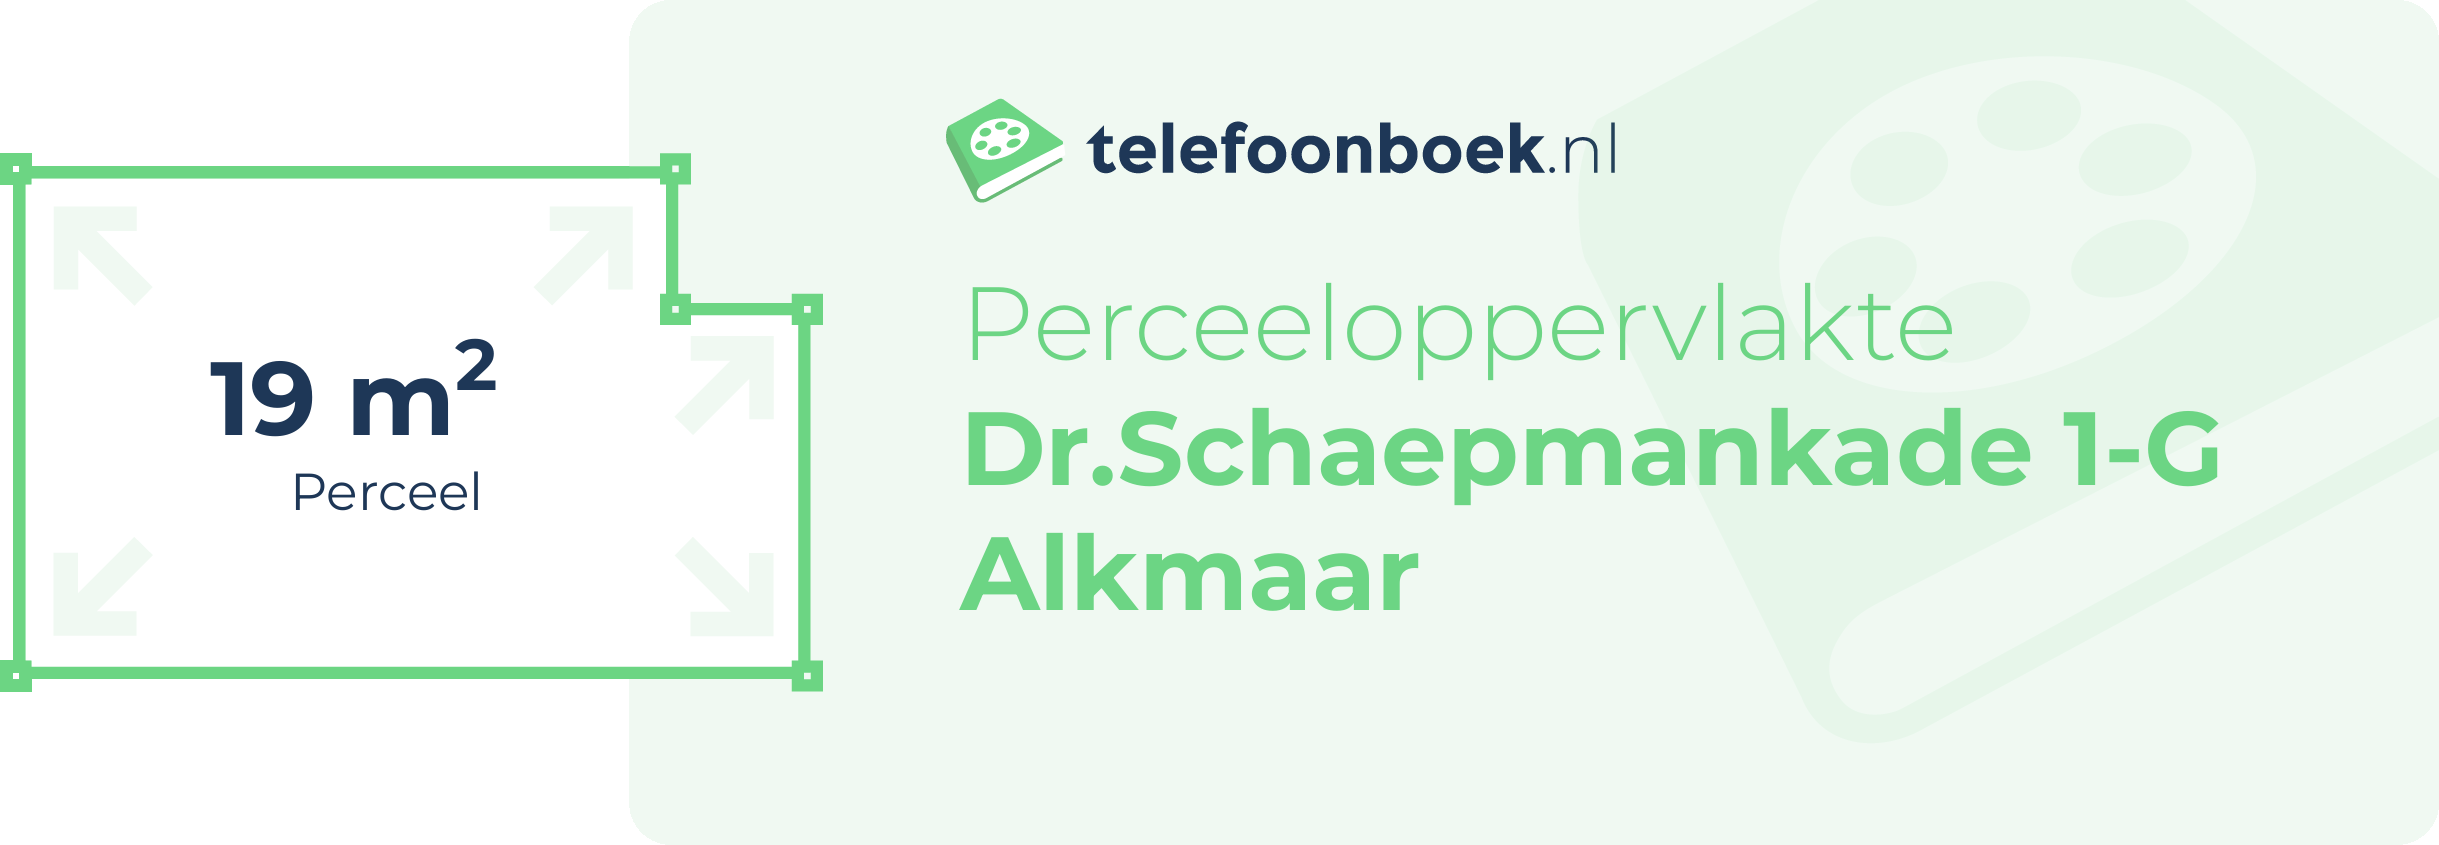 Perceeloppervlakte Dr.Schaepmankade 1-G Alkmaar